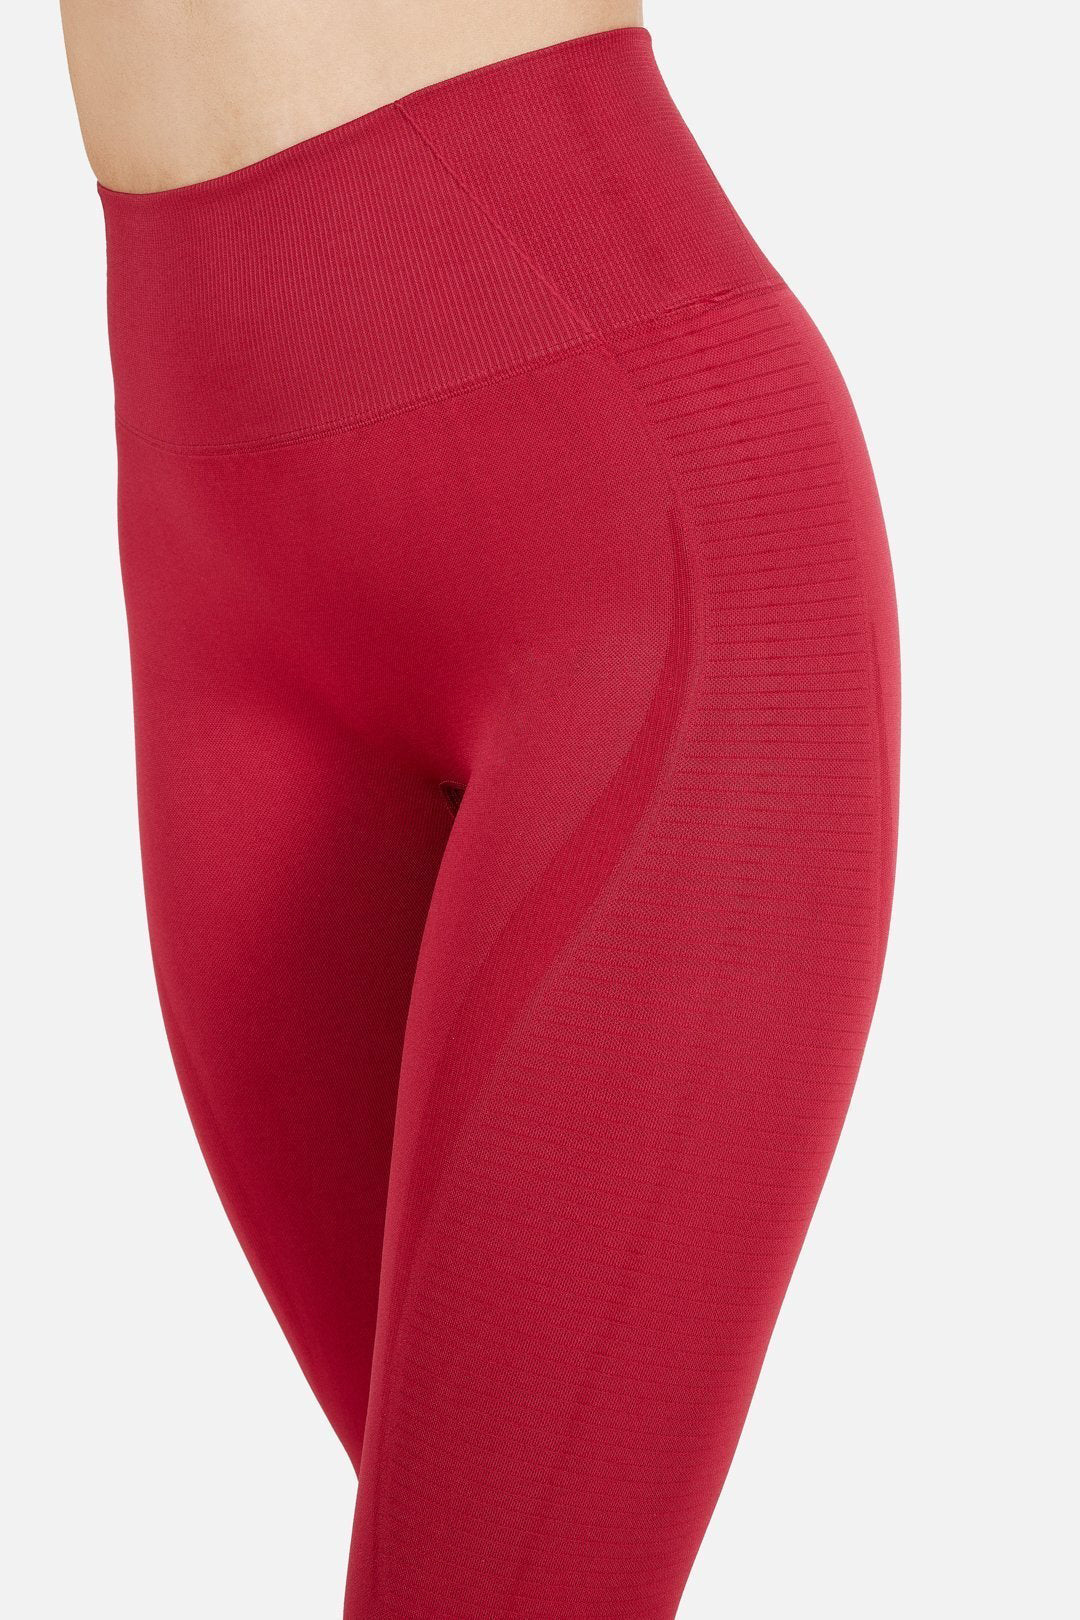 Seamless tights - High waist - Squat proof - Vortex design – Famme